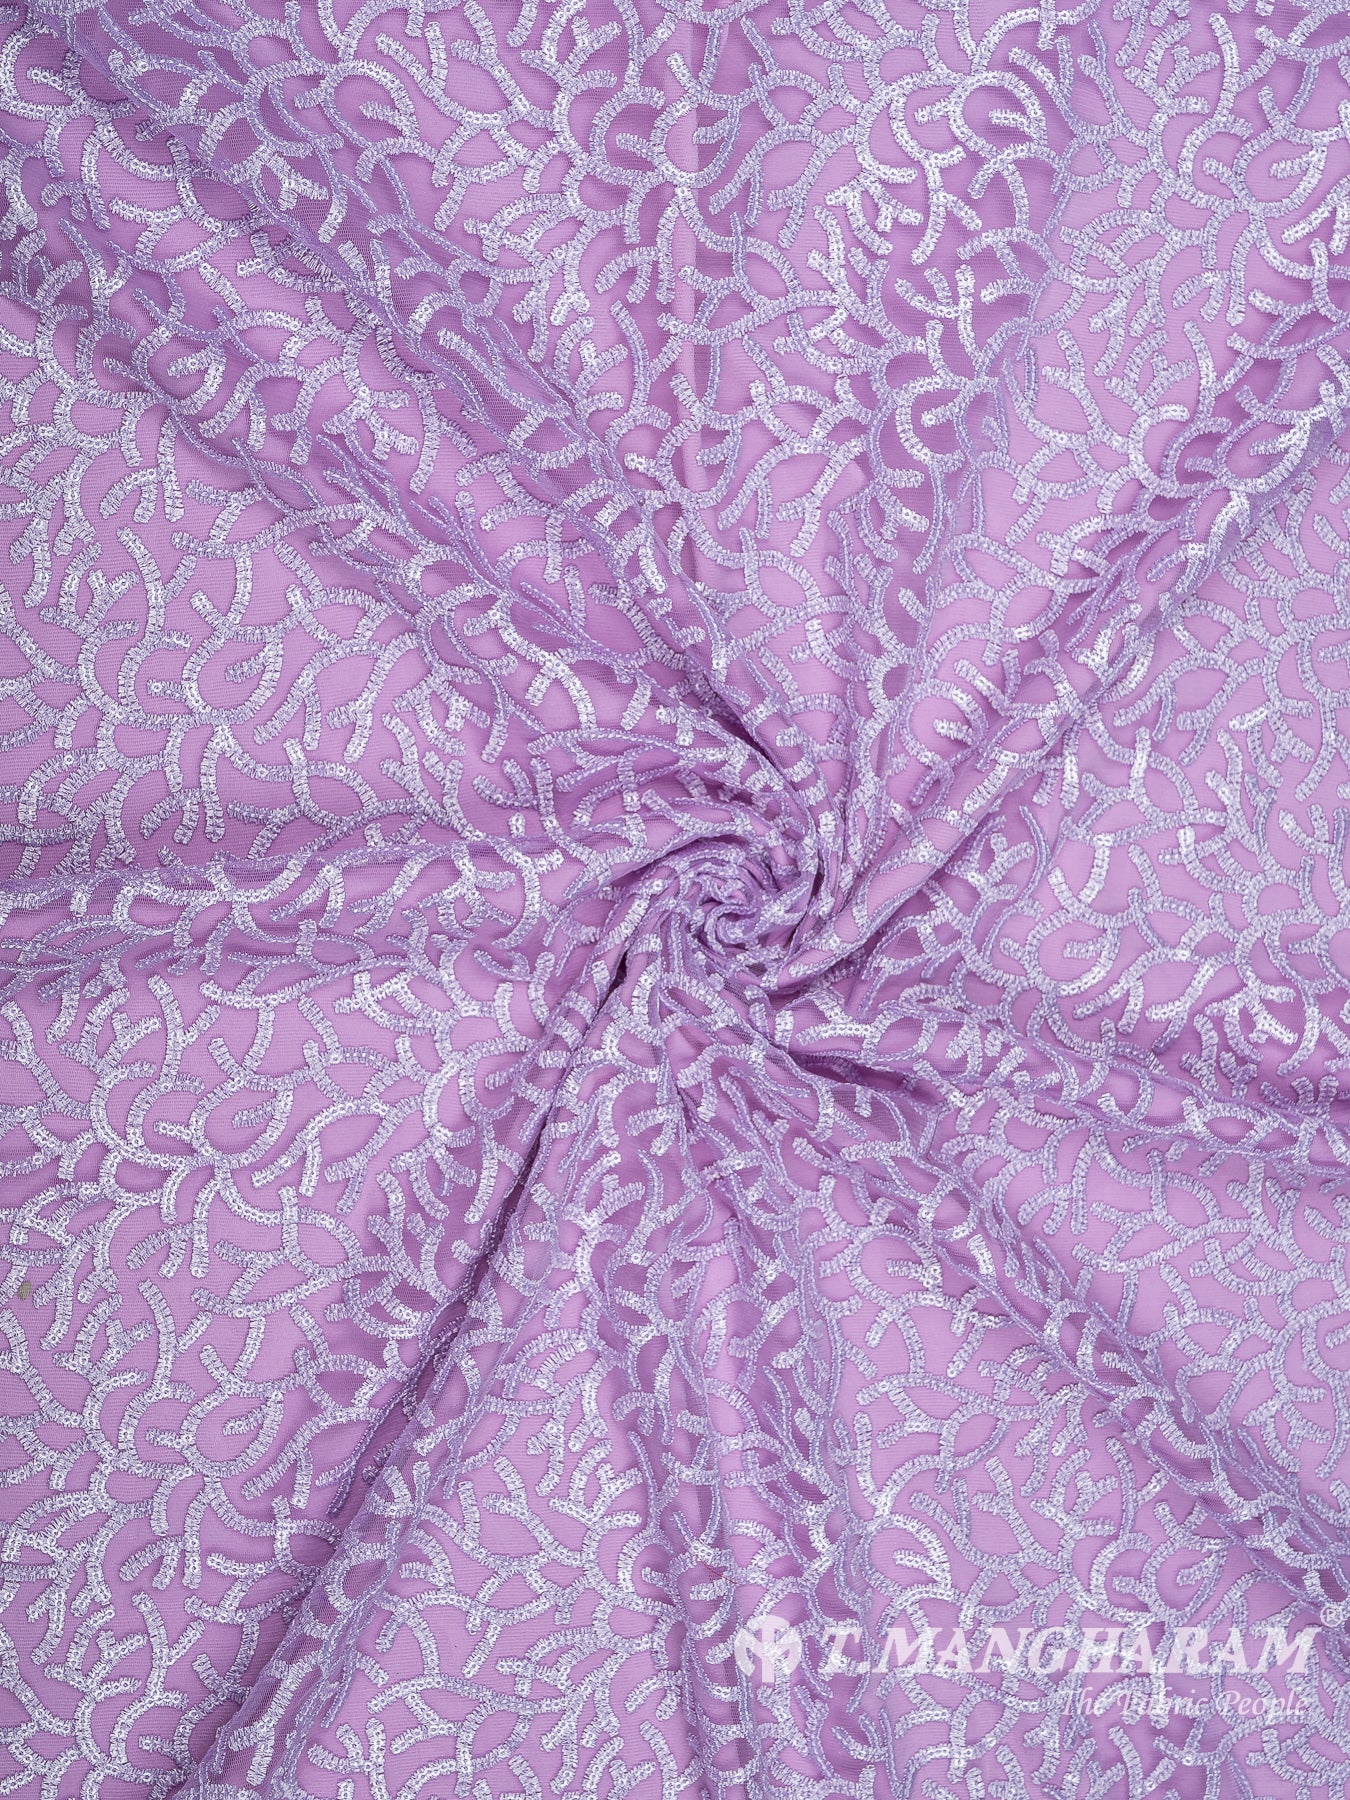 Violet Fancy Net Fabric - EB5788 view-1